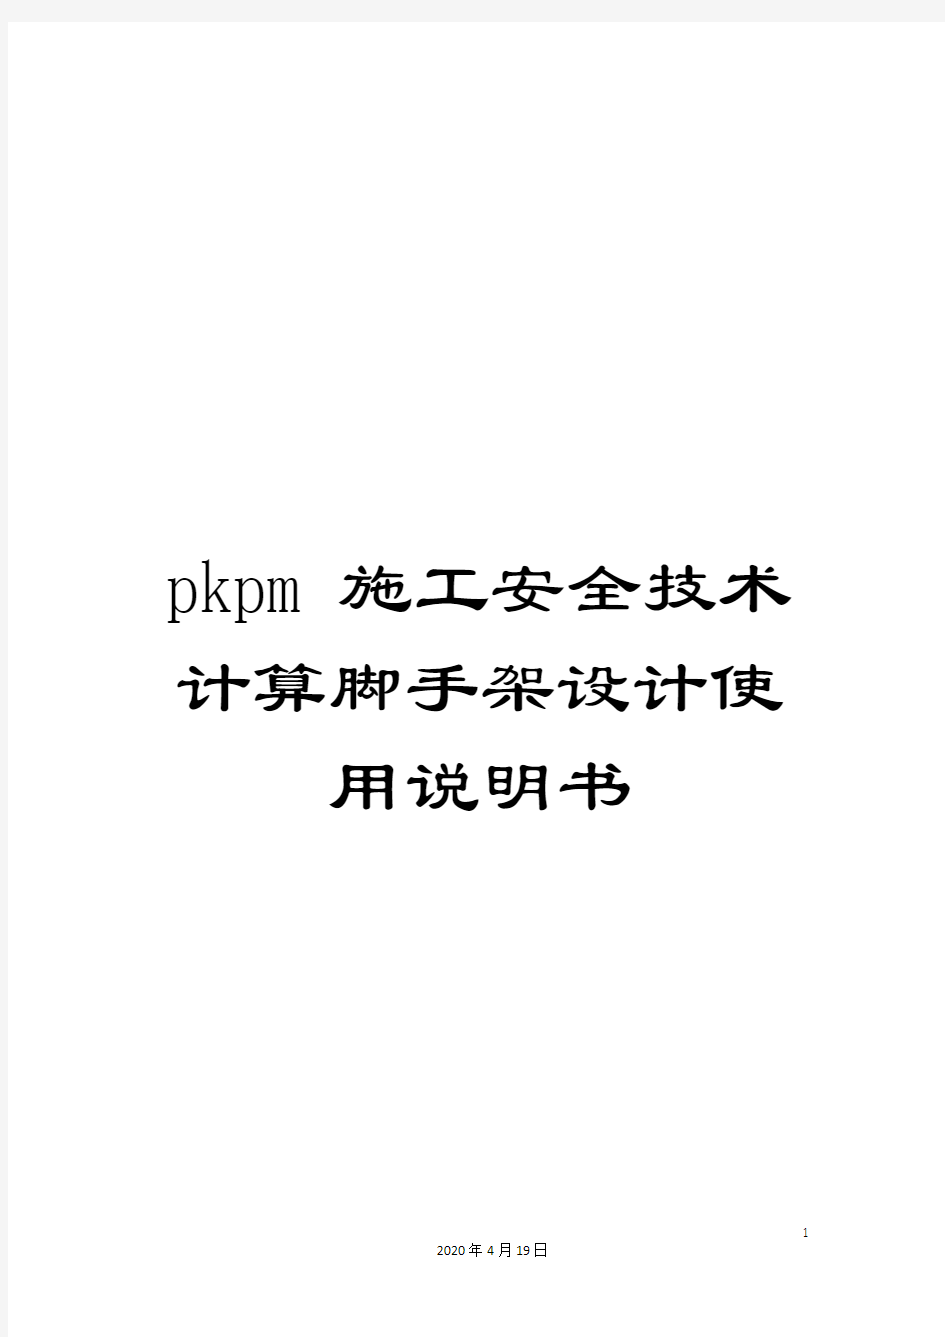 pkpm施工安全技术计算脚手架设计使用说明书